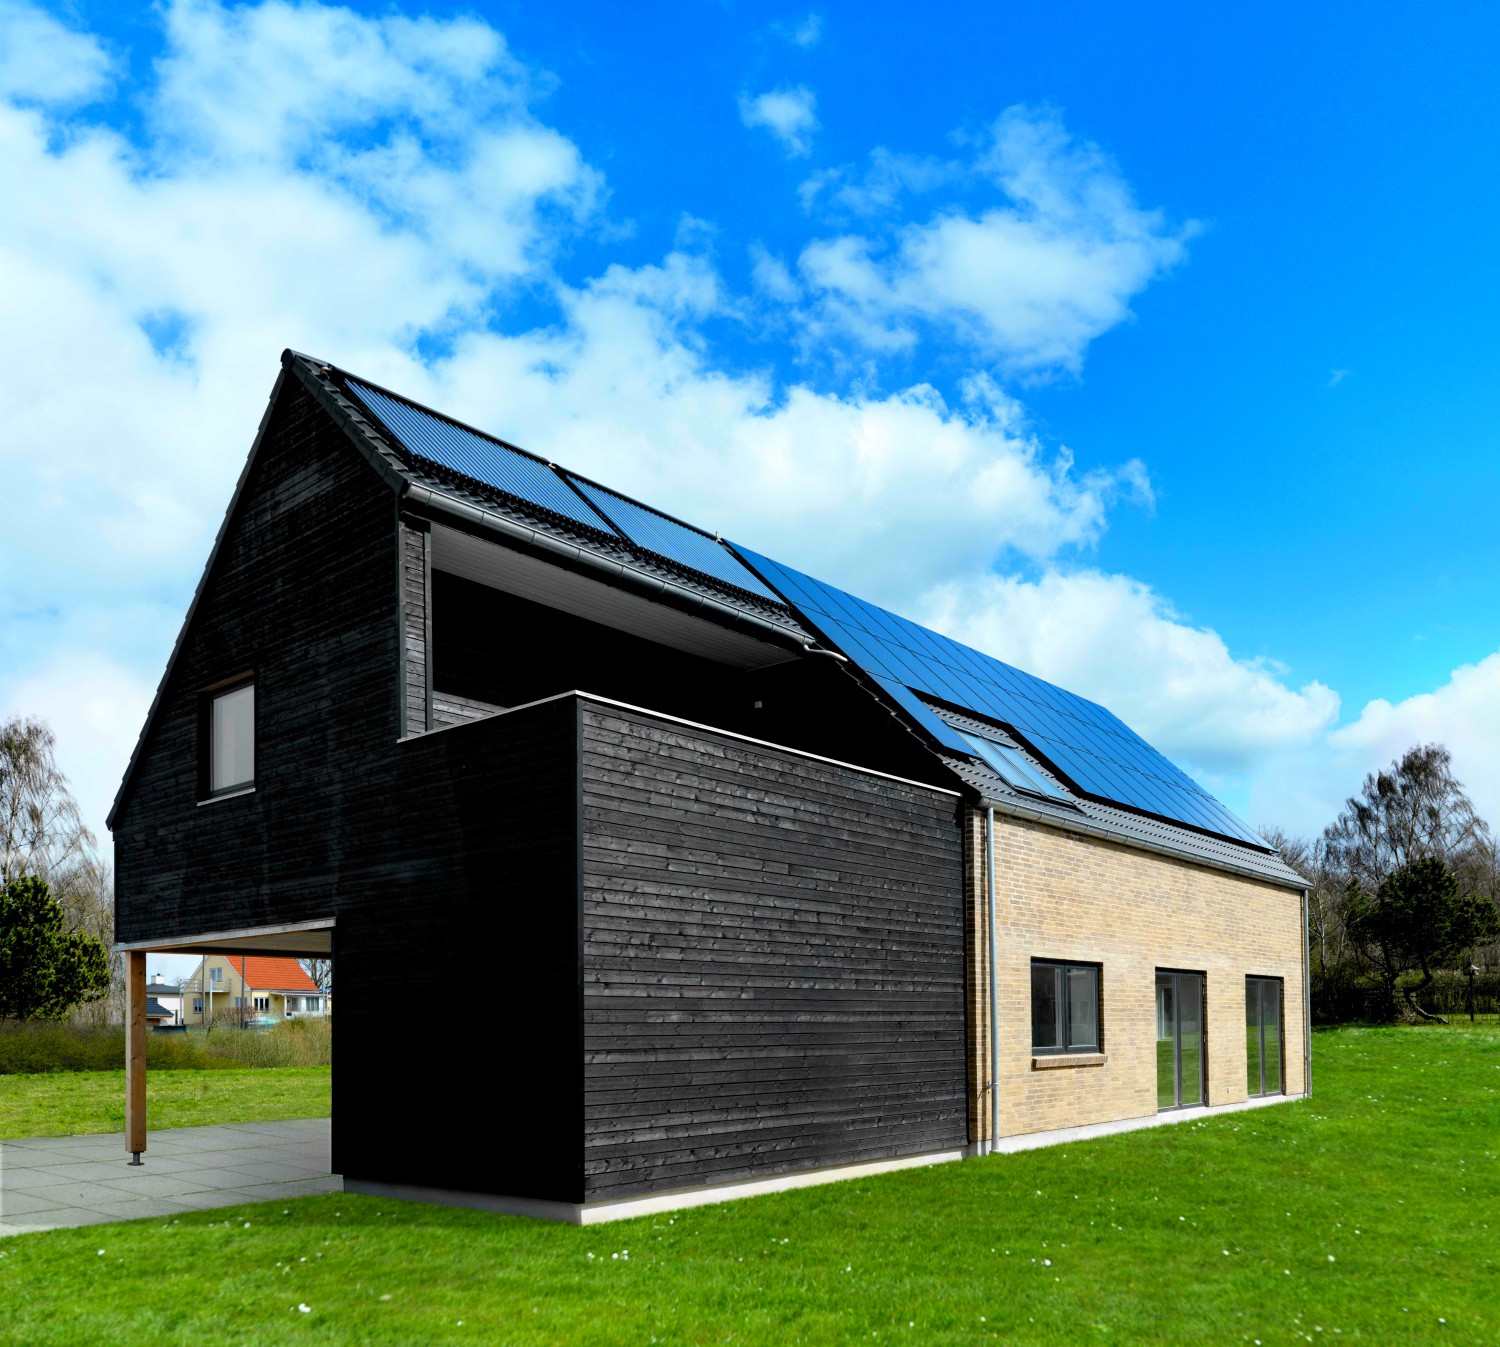 DEVImat Underfloor Heating article - Denmark's green house